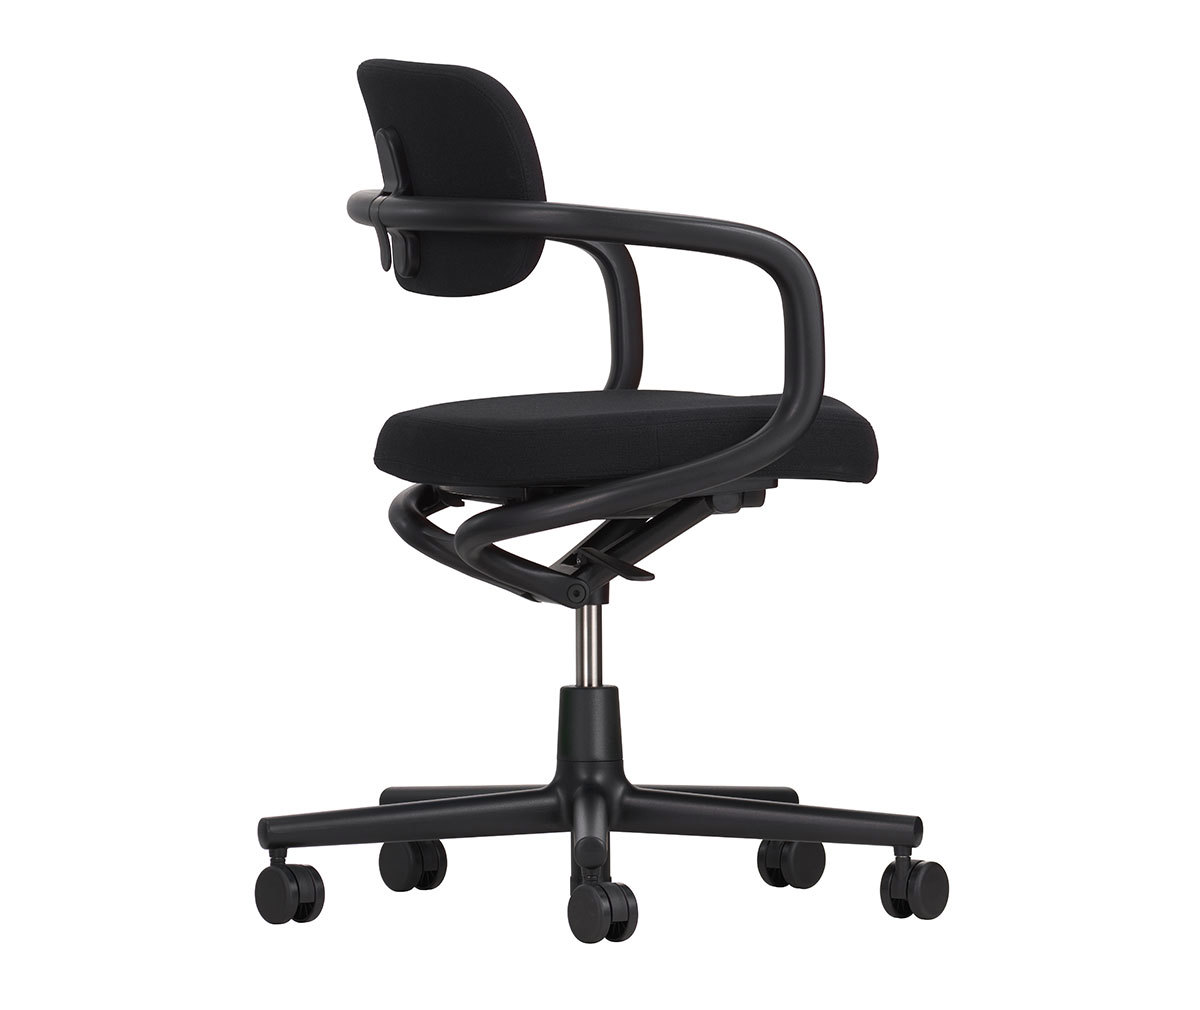 Allstar Office Chair